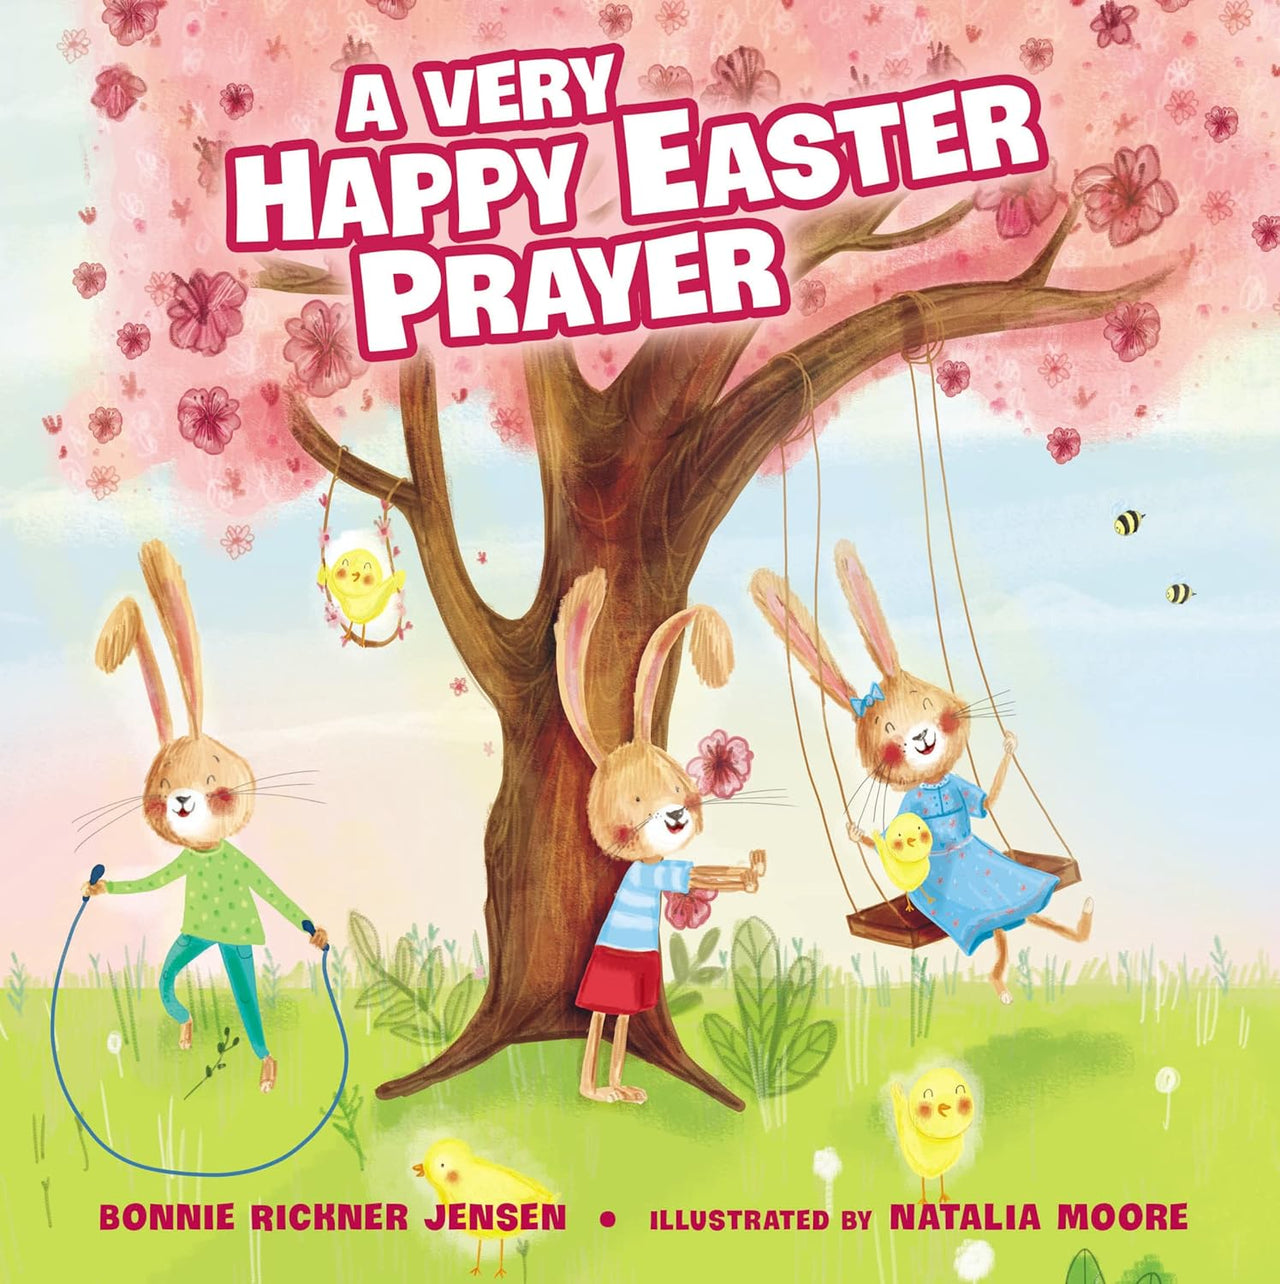 Harper Co A Very Happy Easter Prayer